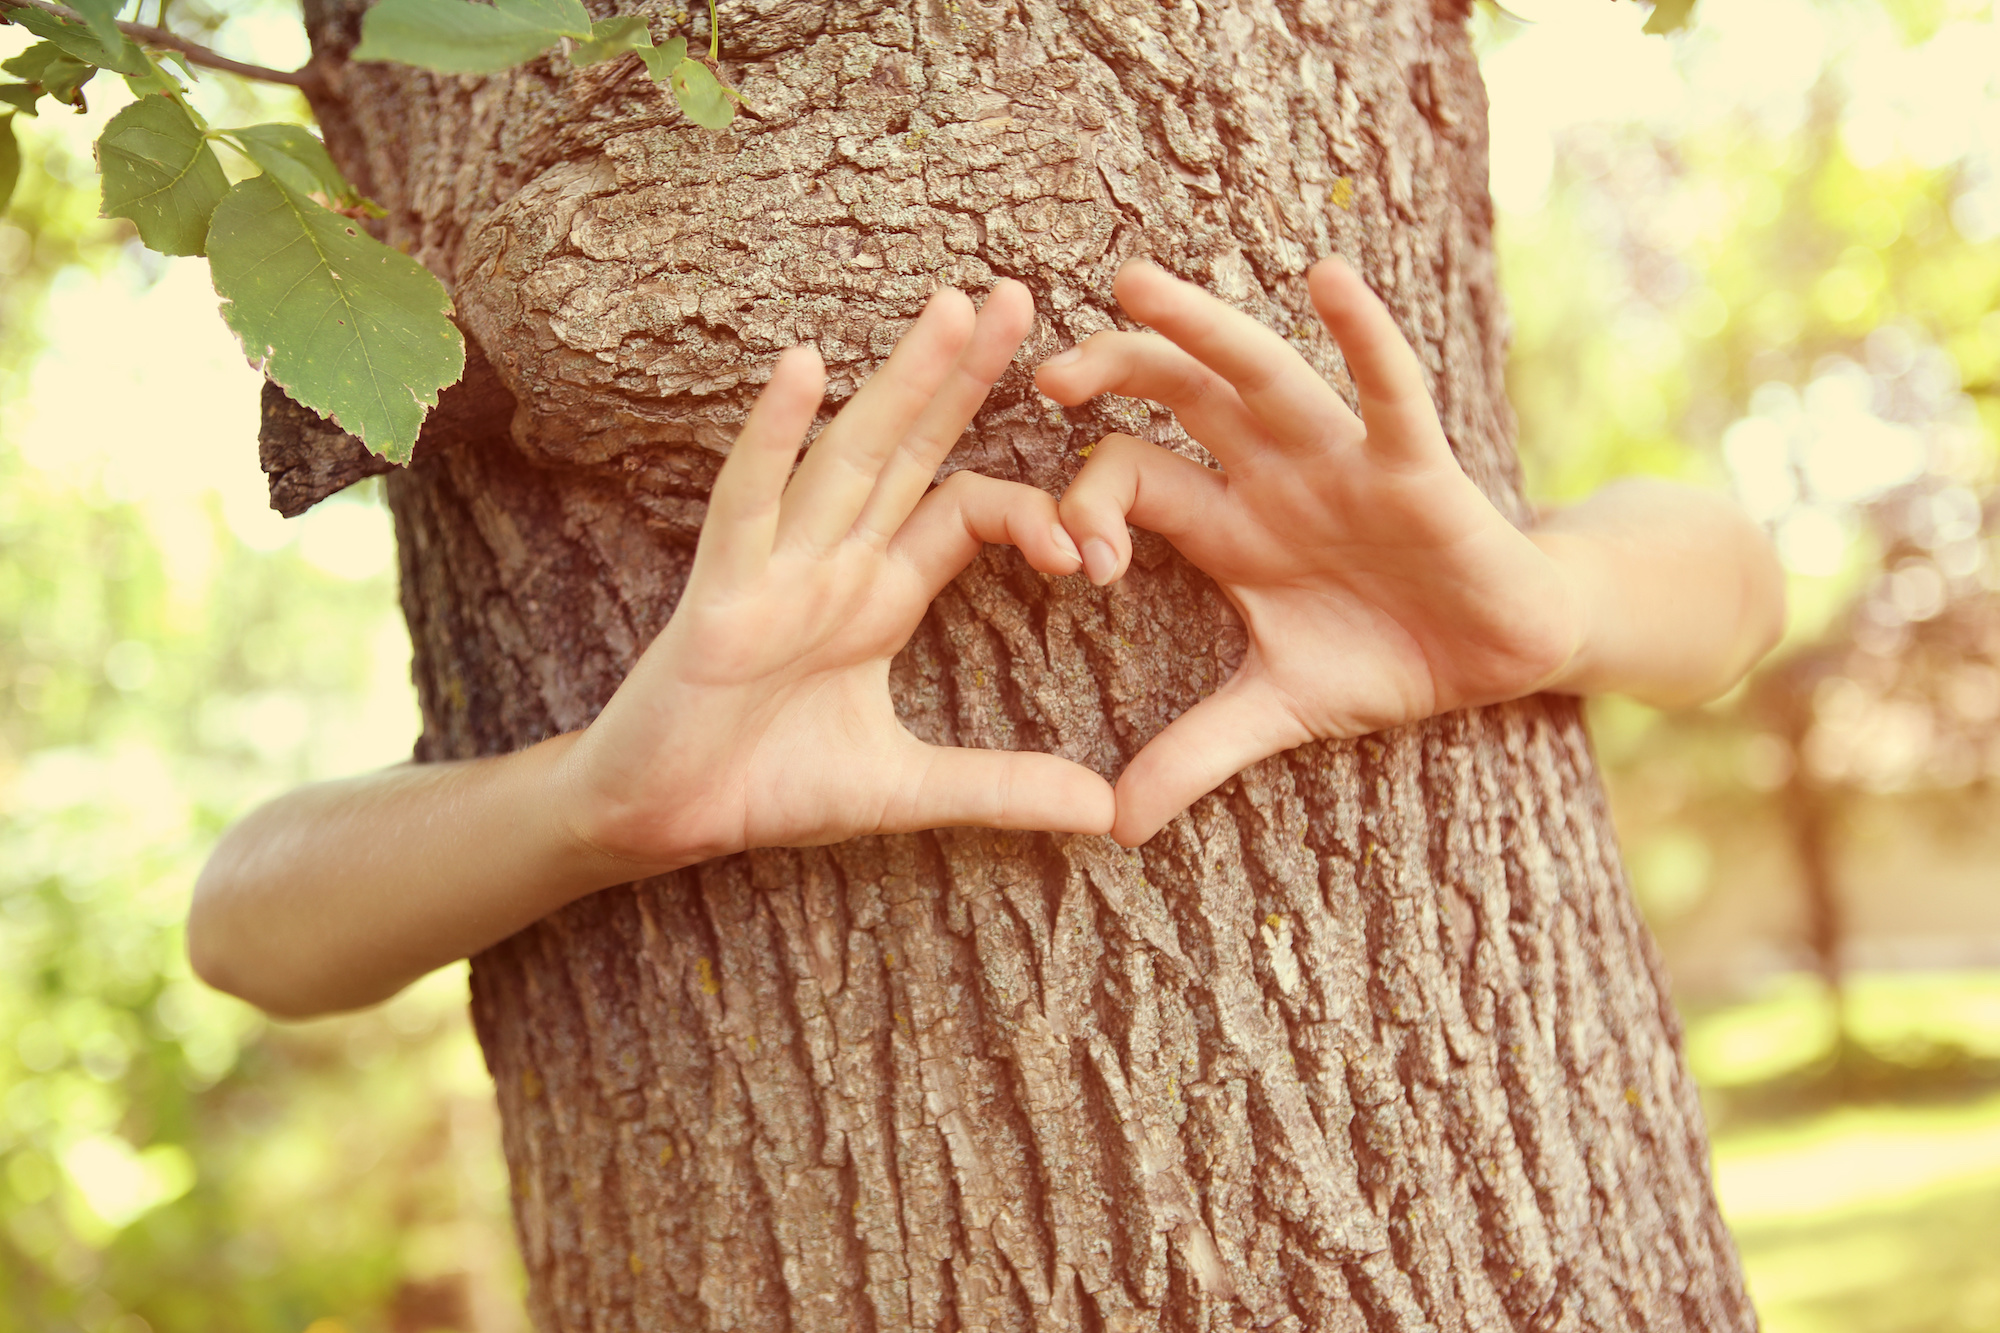 Child's hands making a heart shape on a tree trunk. Instagram effect